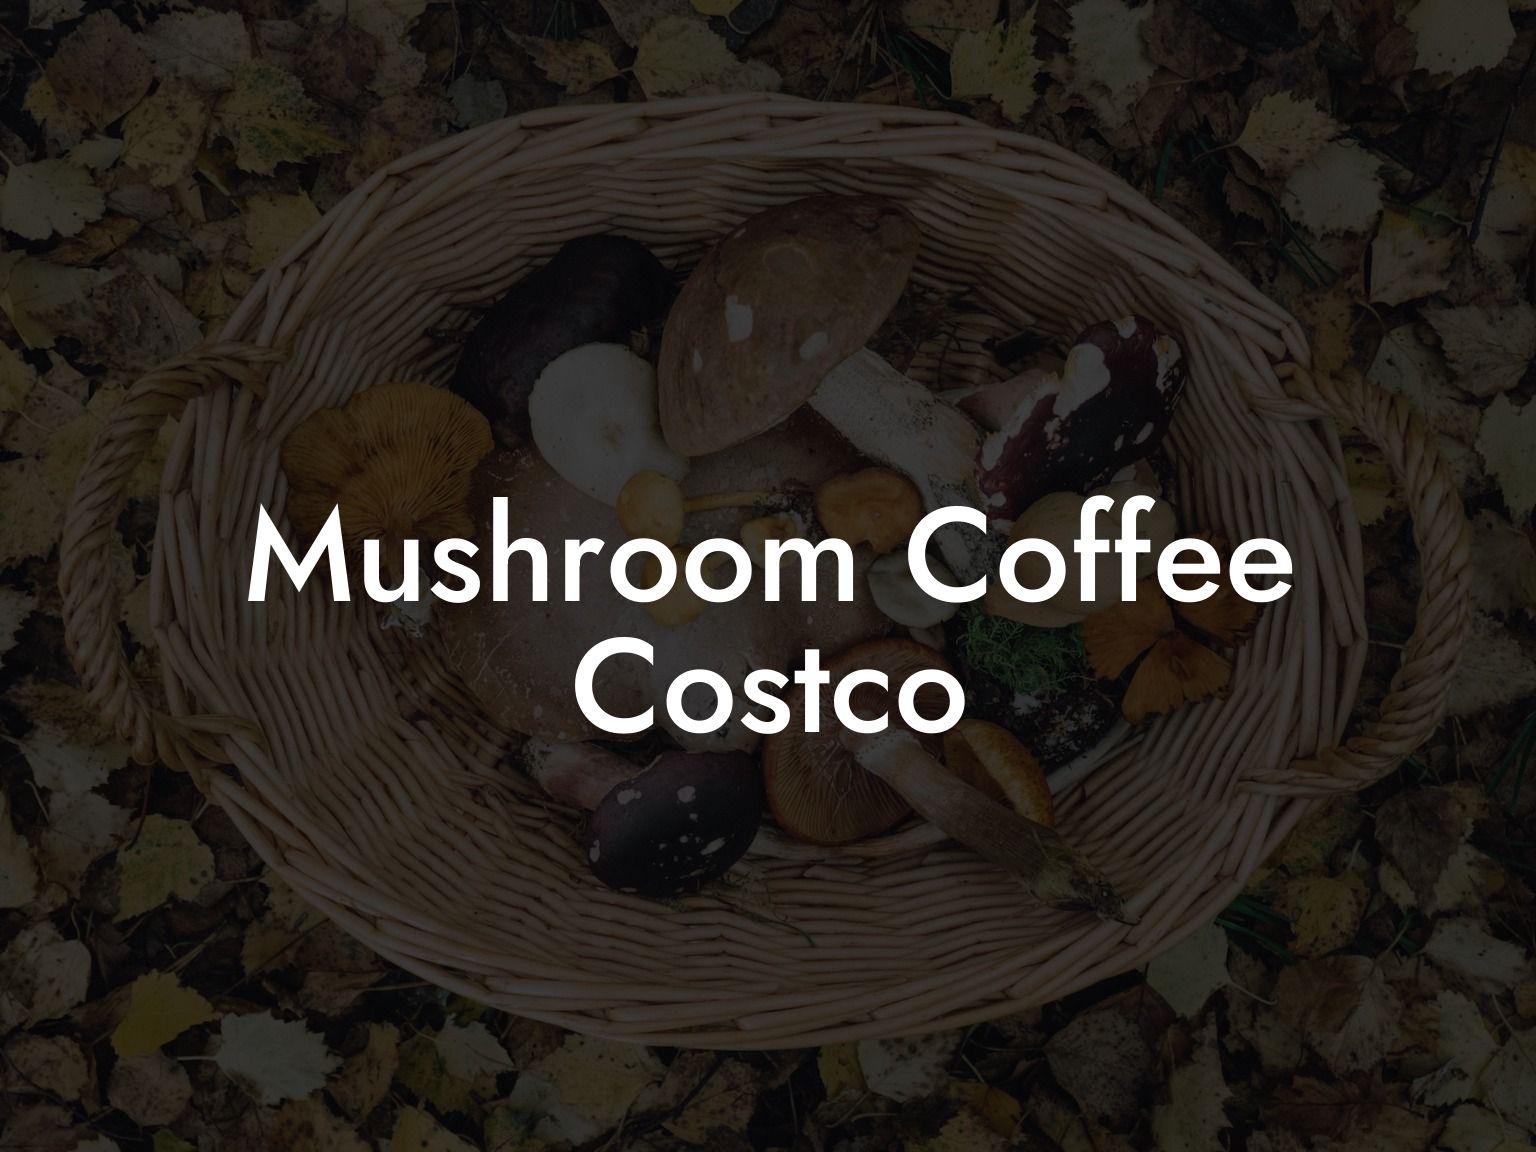 Mushroom Coffee Costco